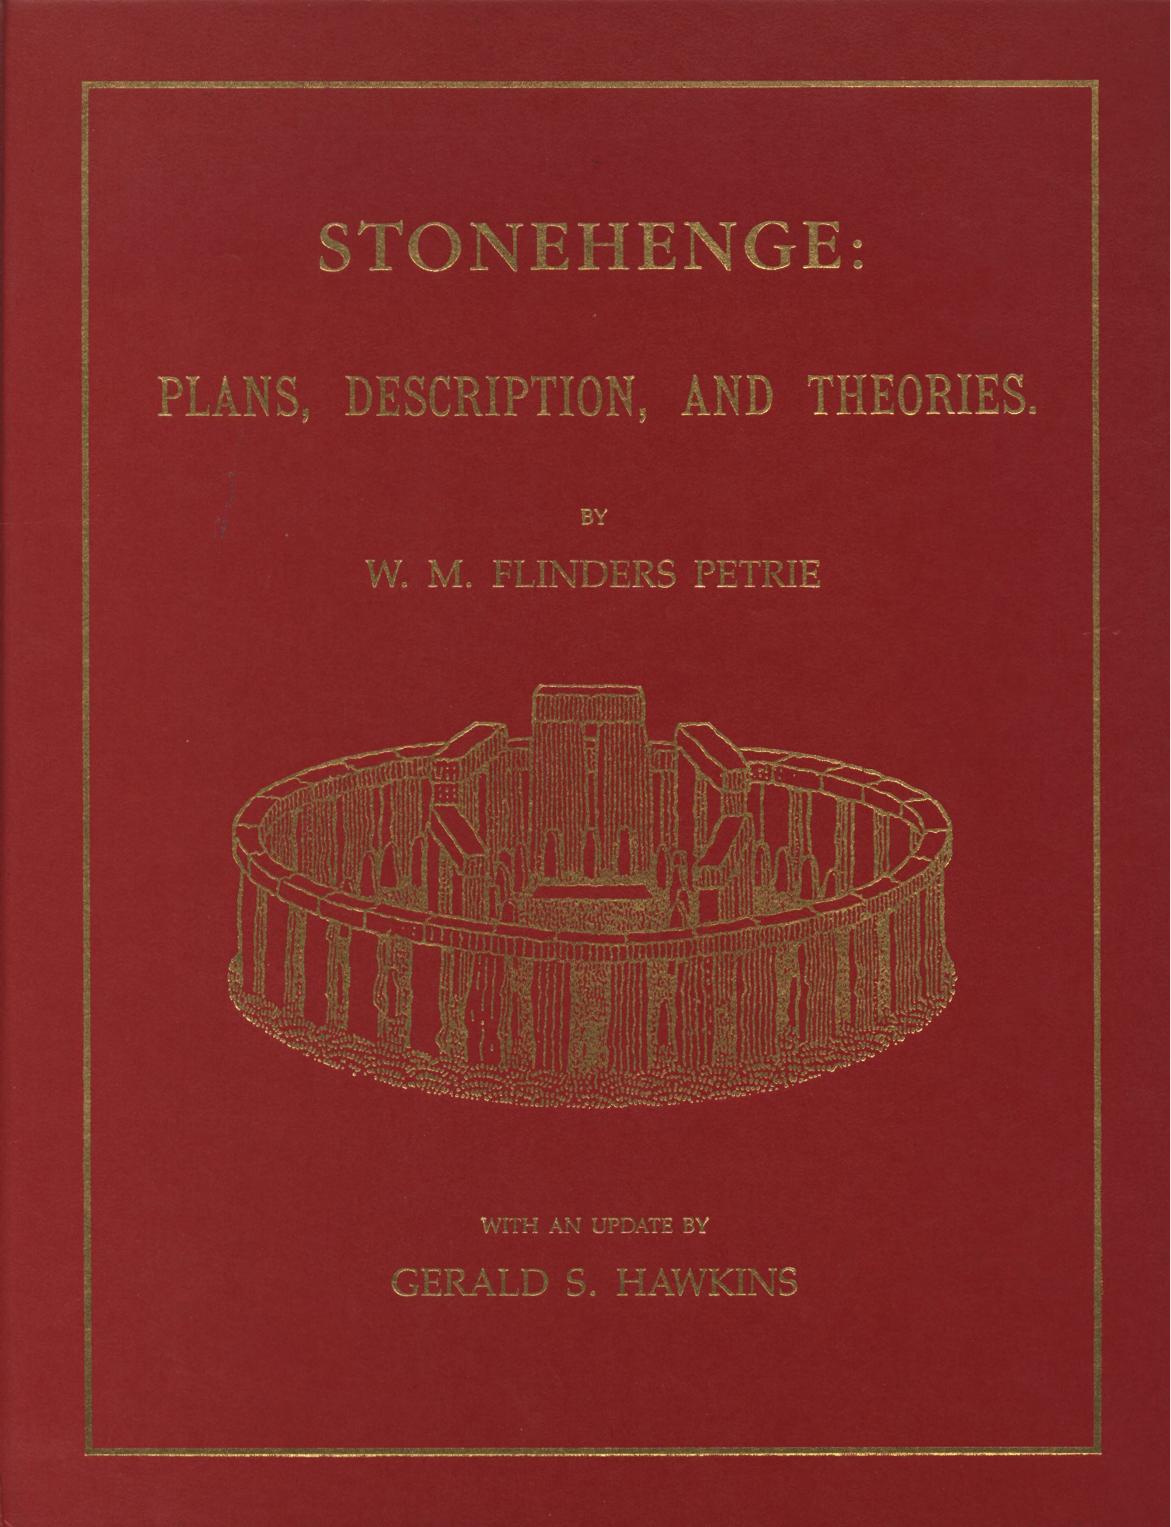 Stonehenge: Plans, Description, and Theories